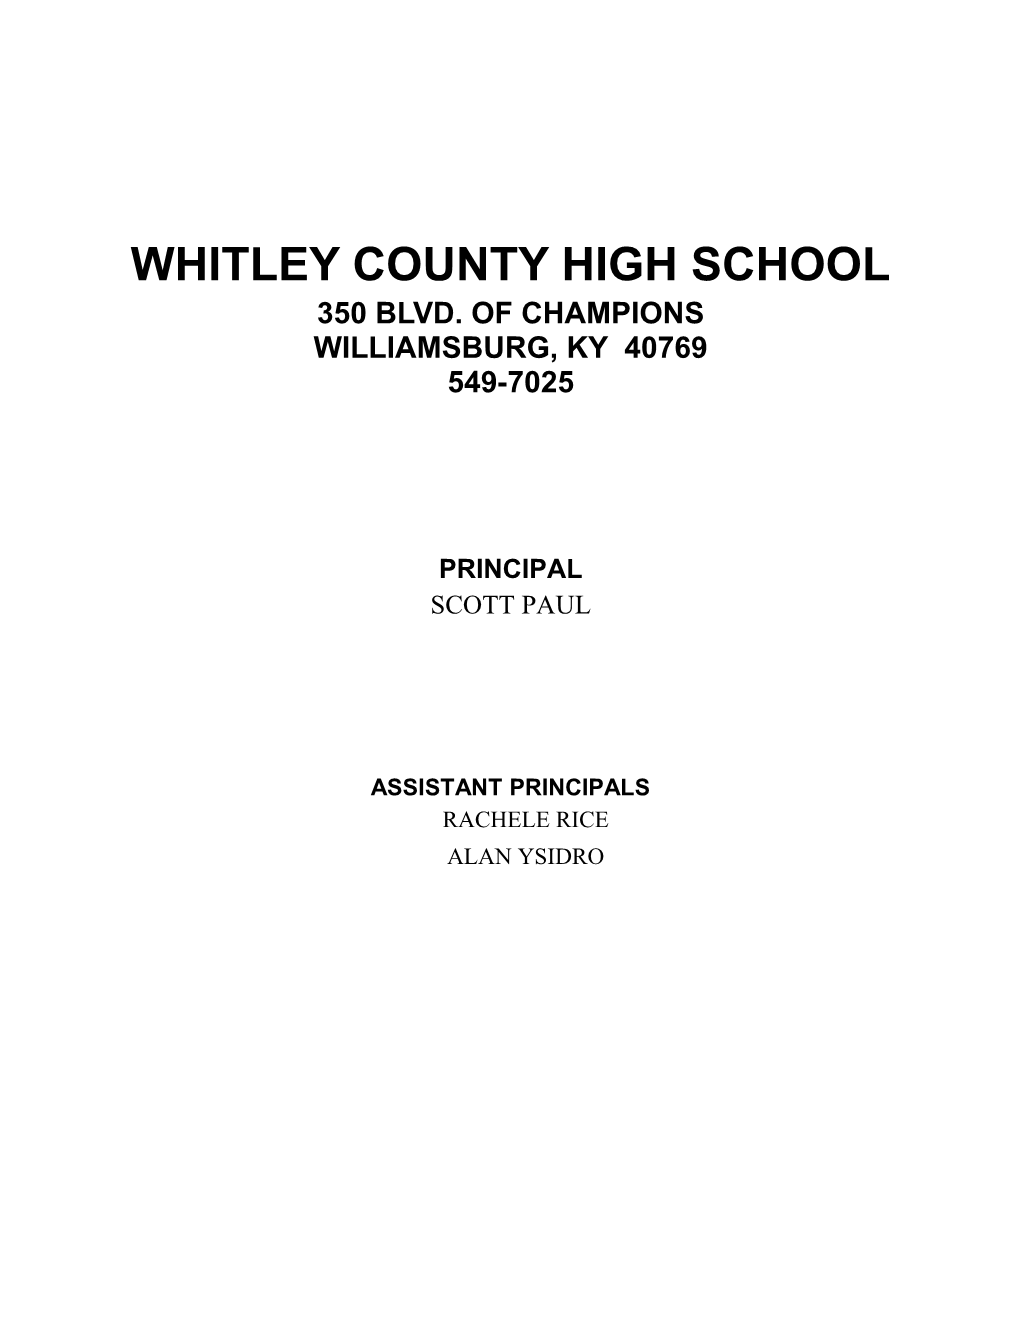 Whitley County High School